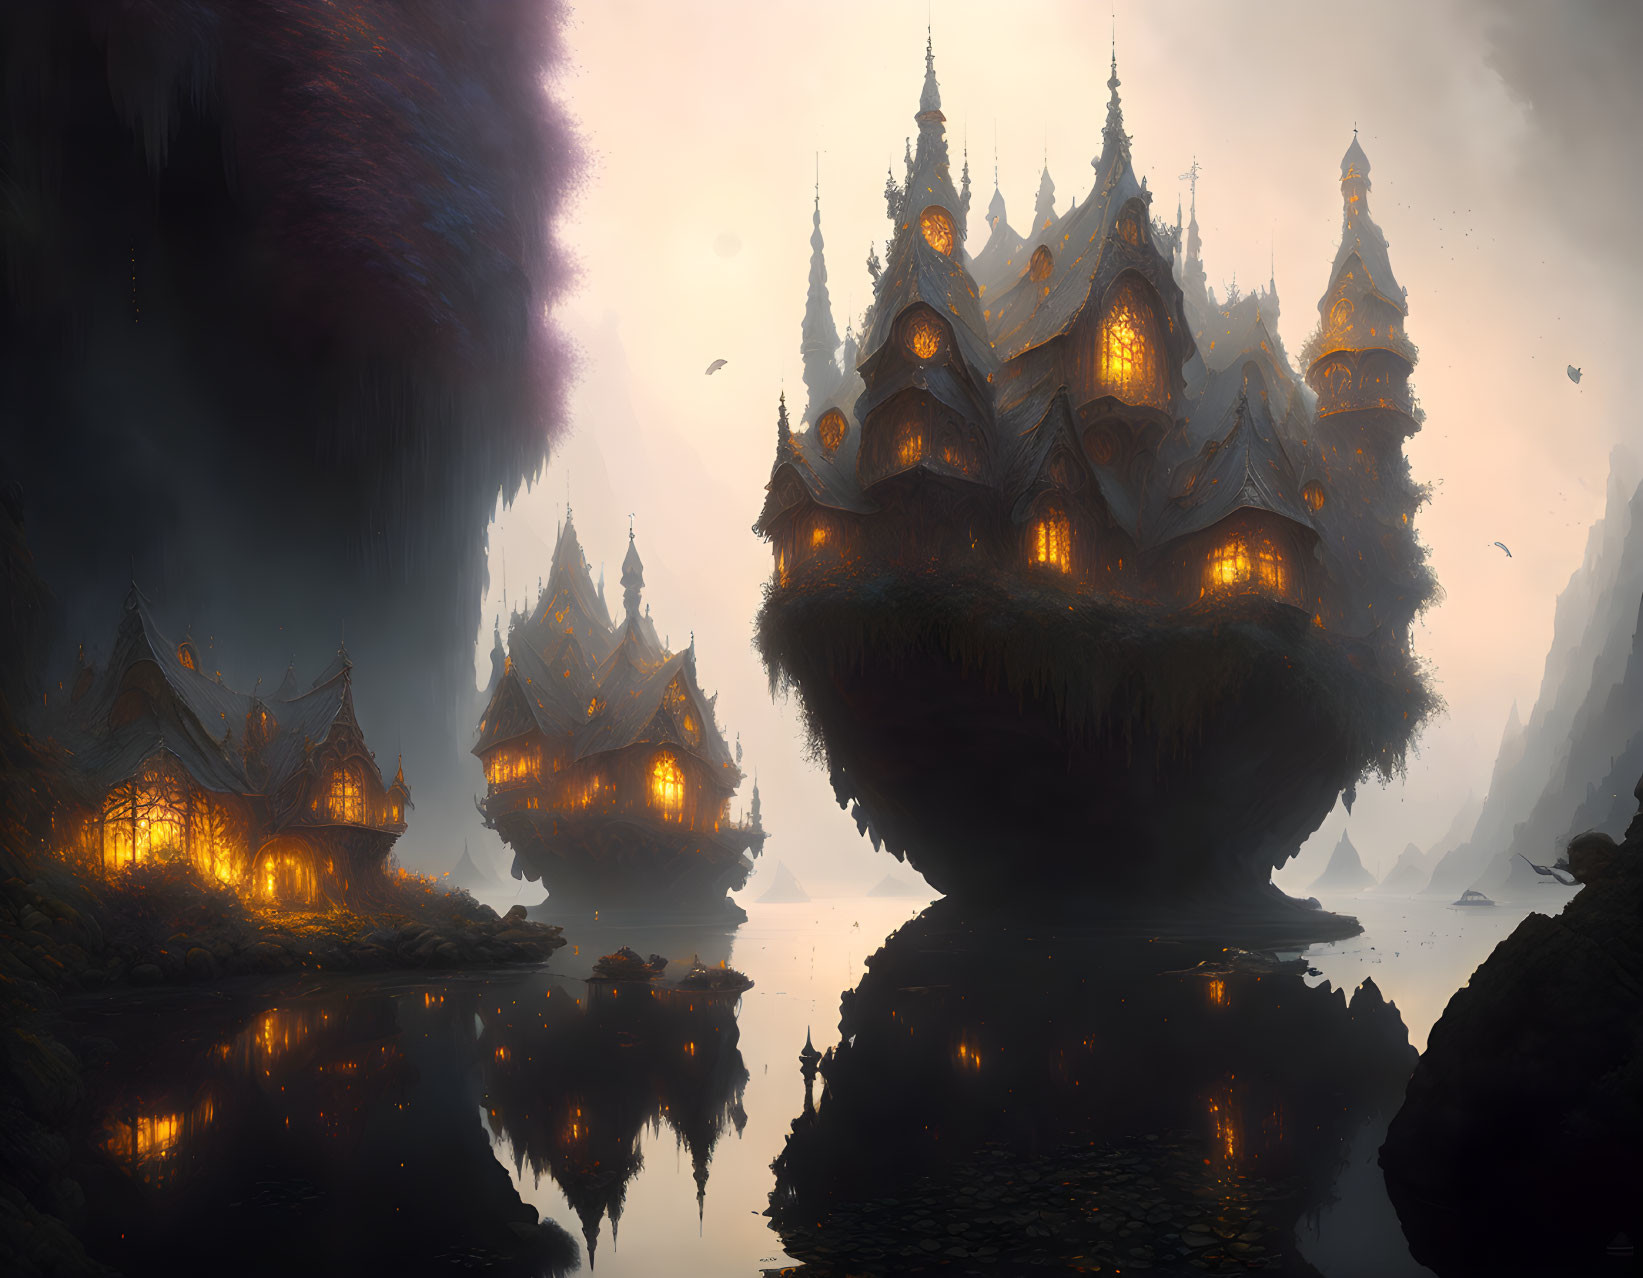 Misty fantasy rock islands with illuminated castles in dusky landscape